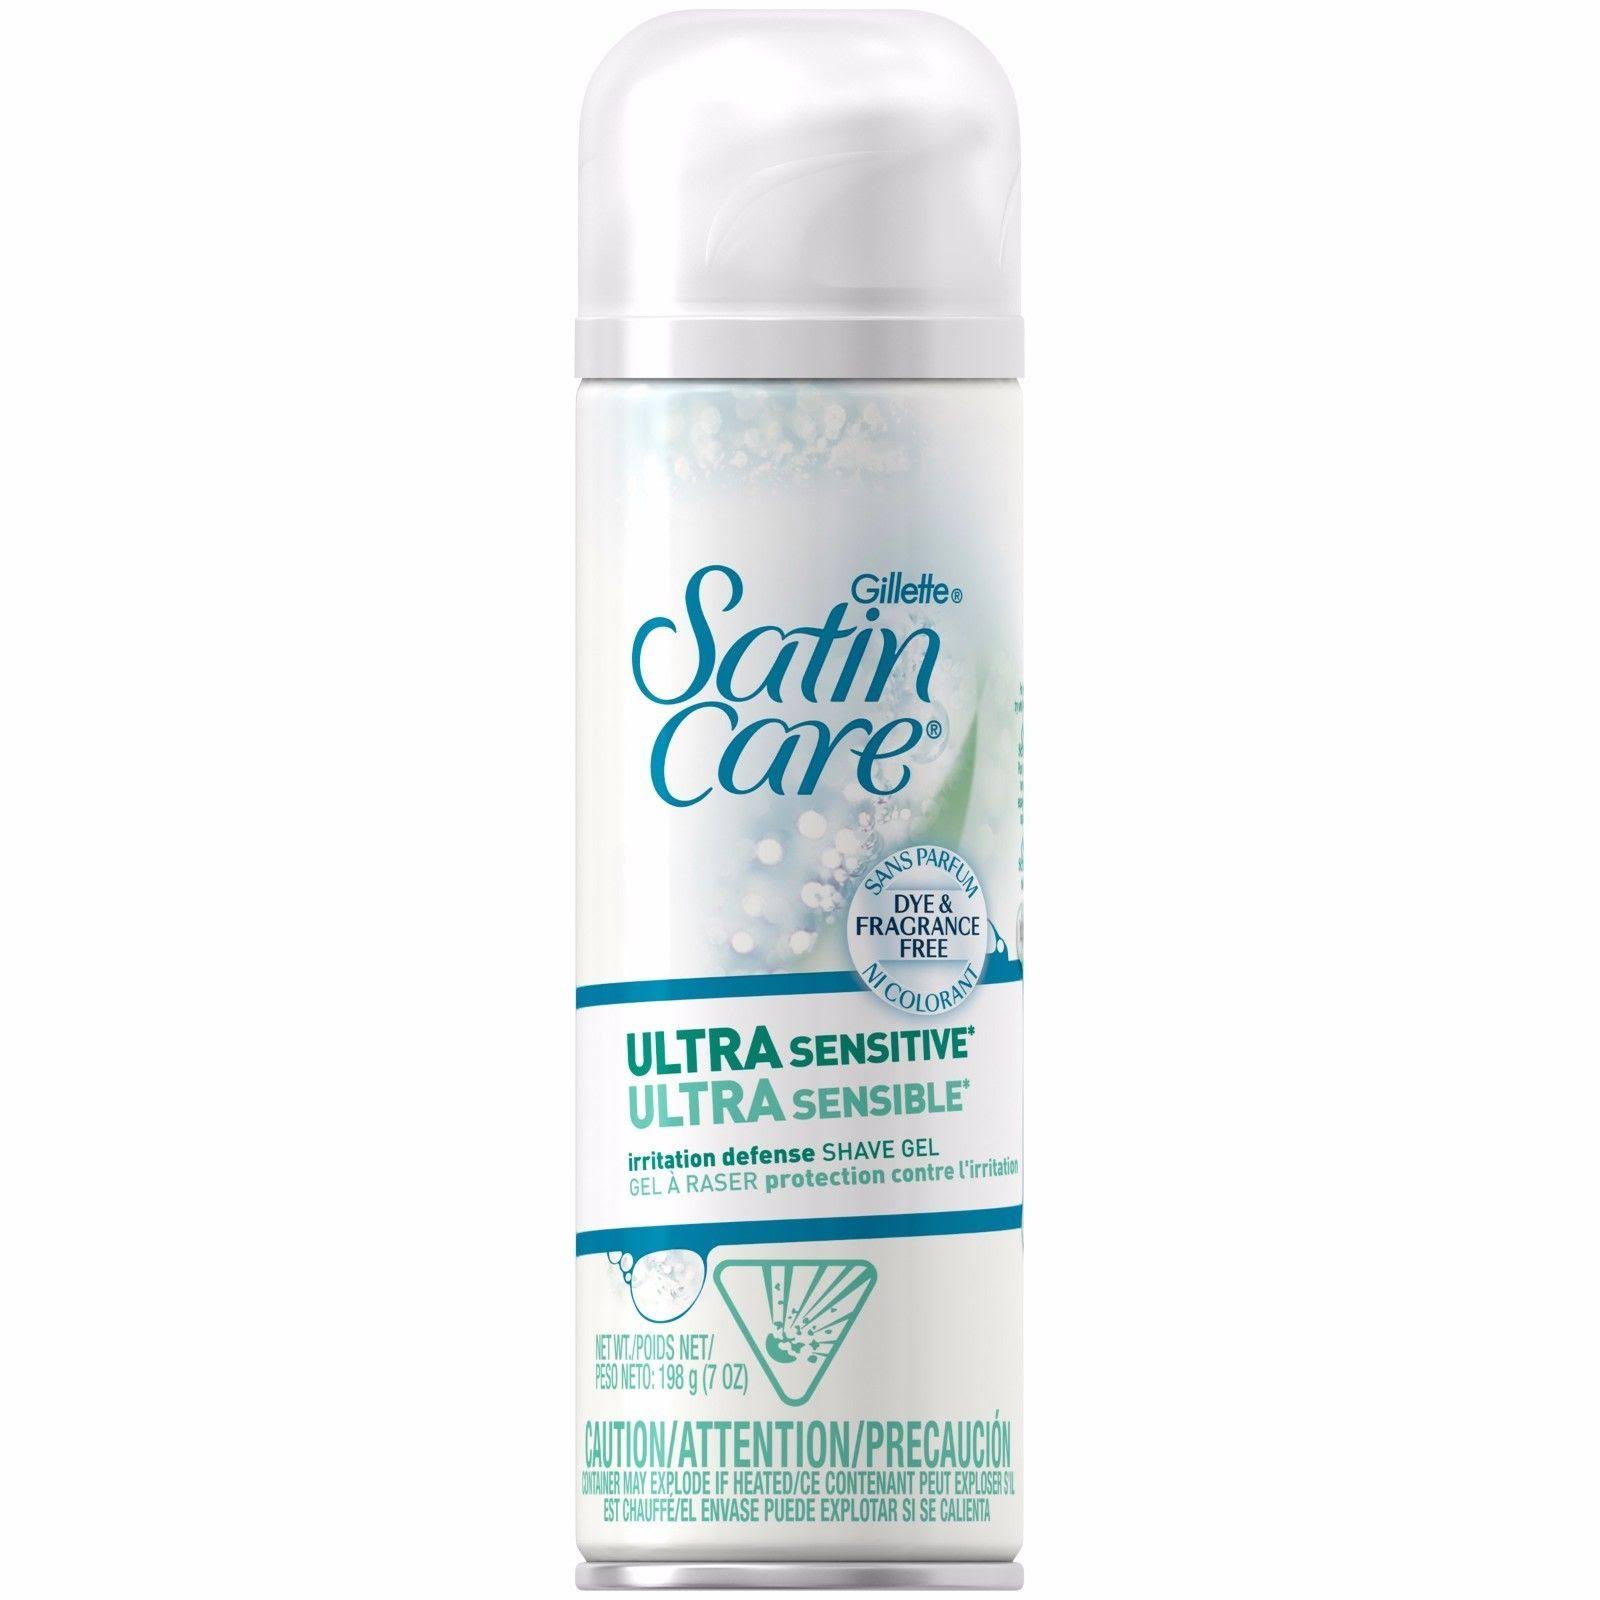 Satin Care Ultra Sensitive Irritation Defense Shave Gel